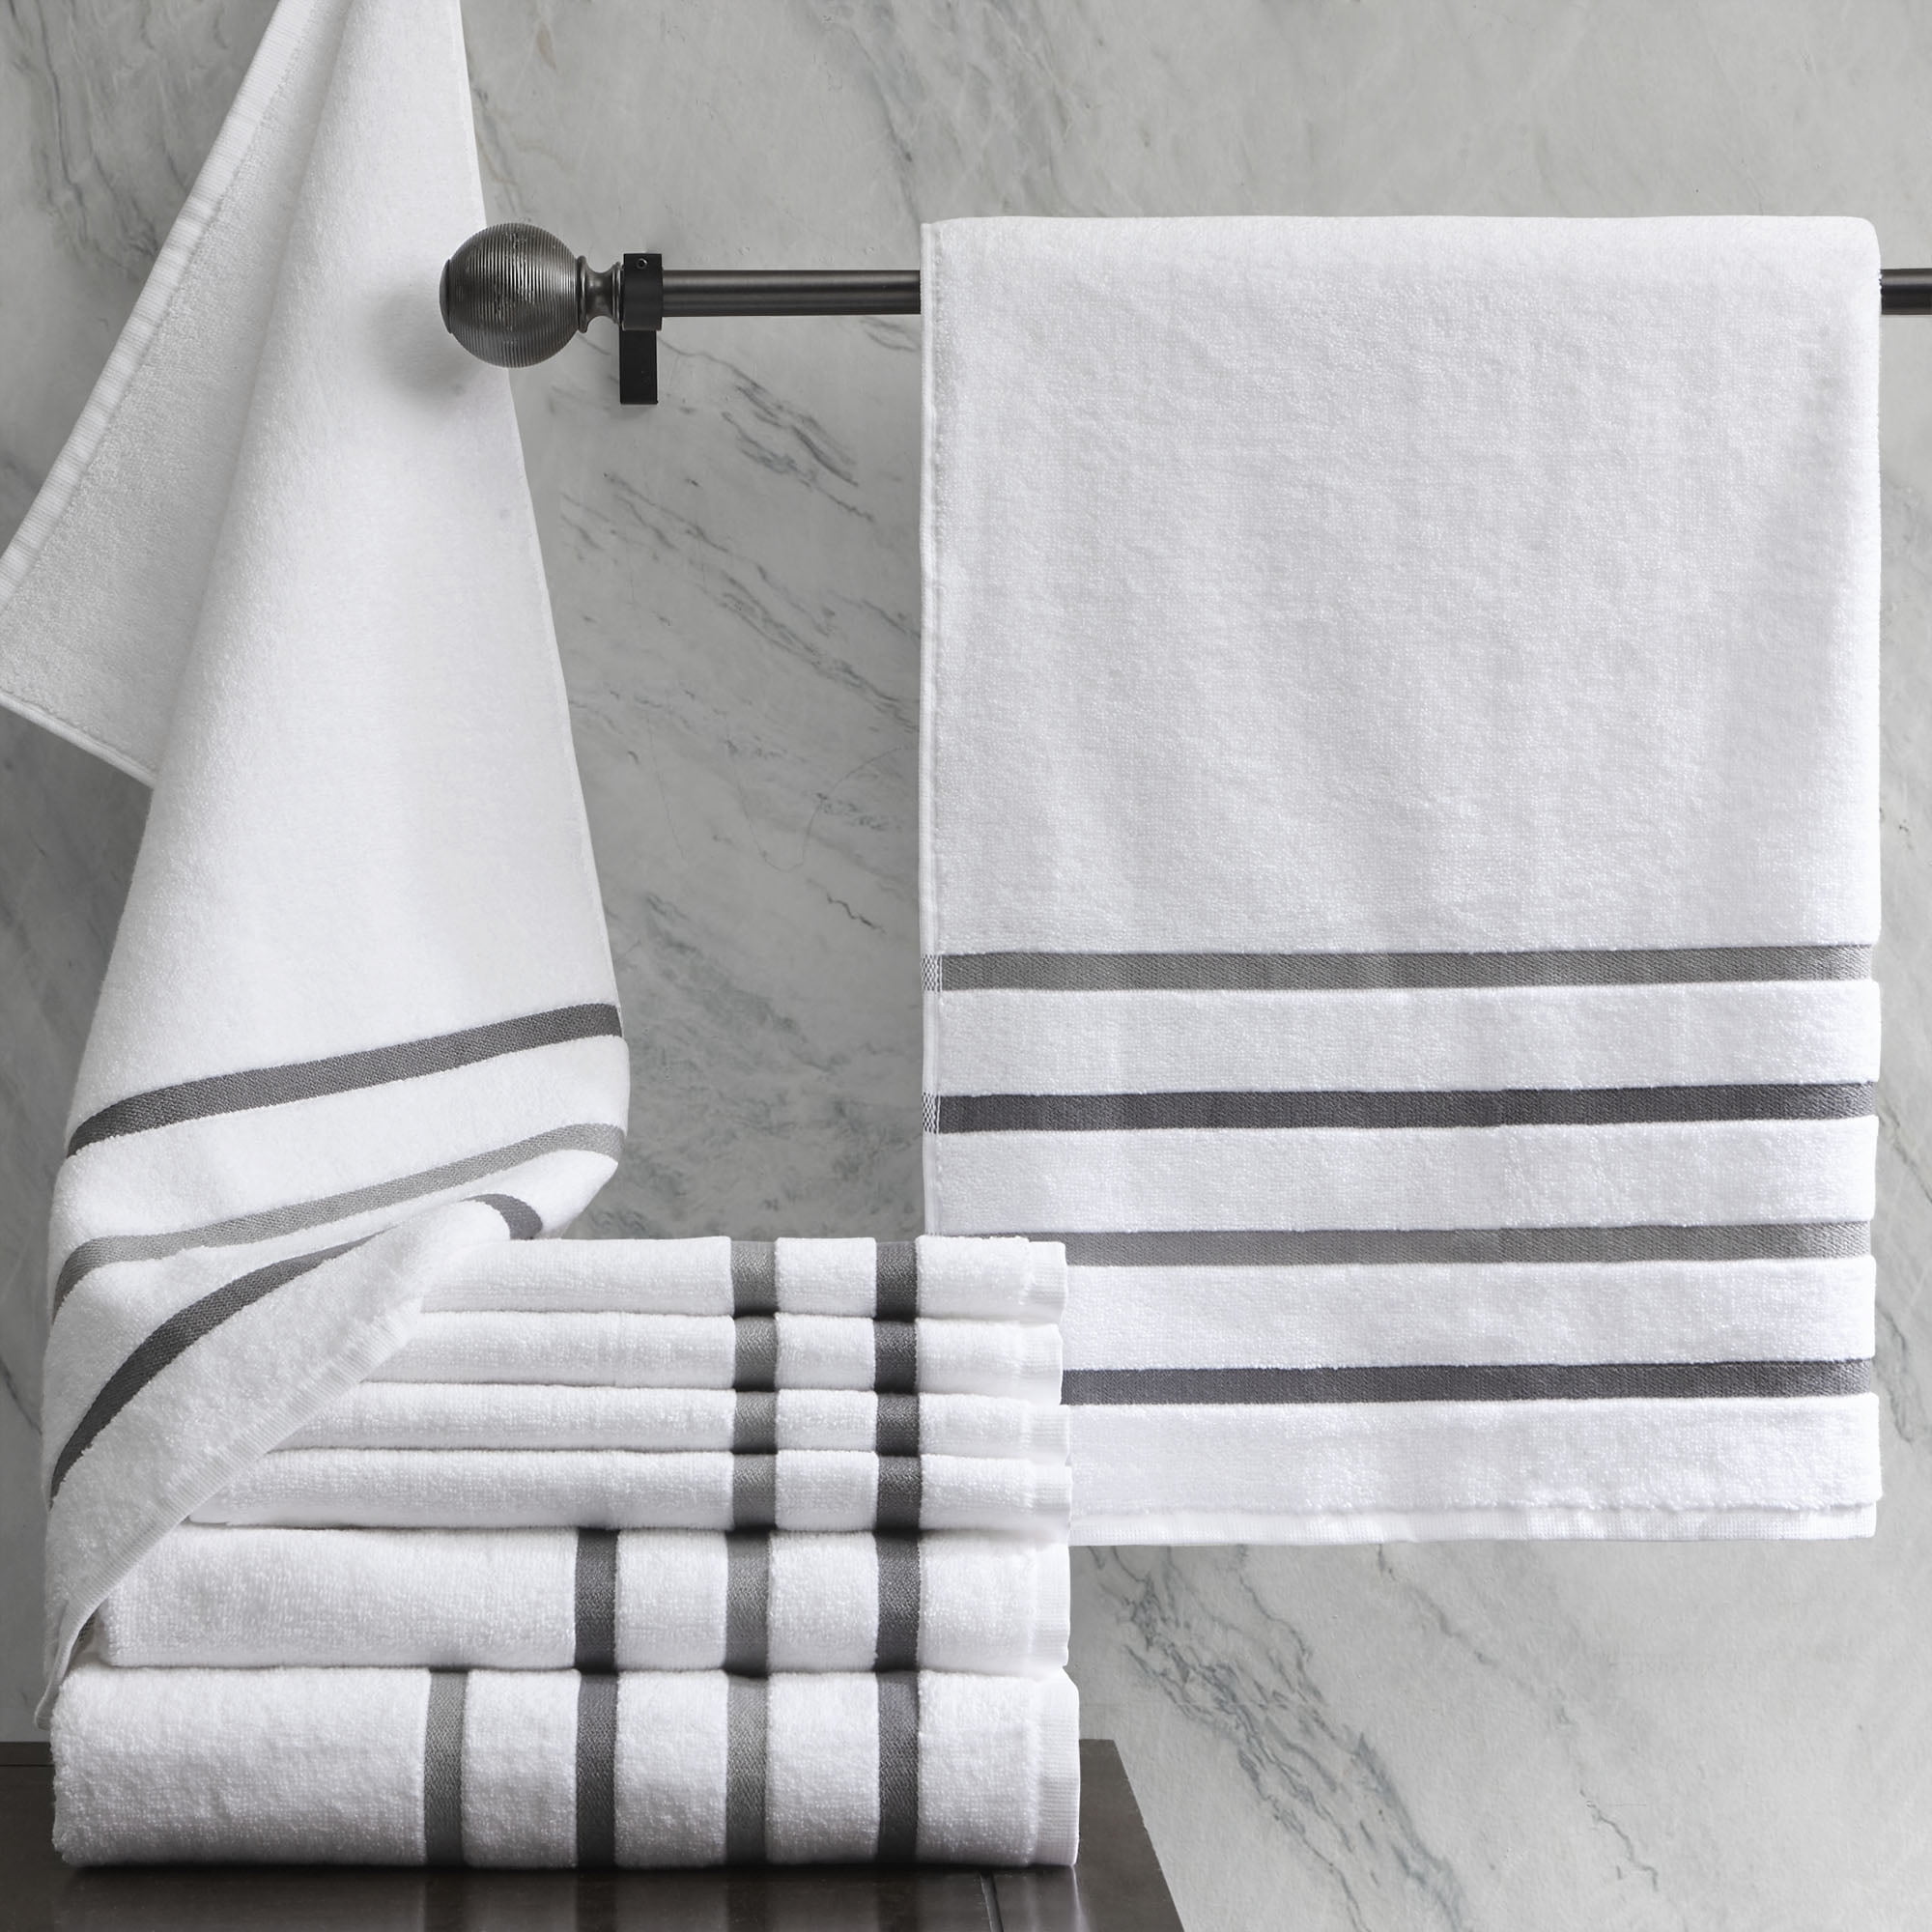  LANE LINEN Large Bath Towels - 100% Cotton Bath Sheets, Extra  Large Bath Towels, Zero Twist, 4 Piece Bath Sheet Set, Quick Dry, Super  Soft Shower Towels, Highly Absorbent Bathroom Towels 